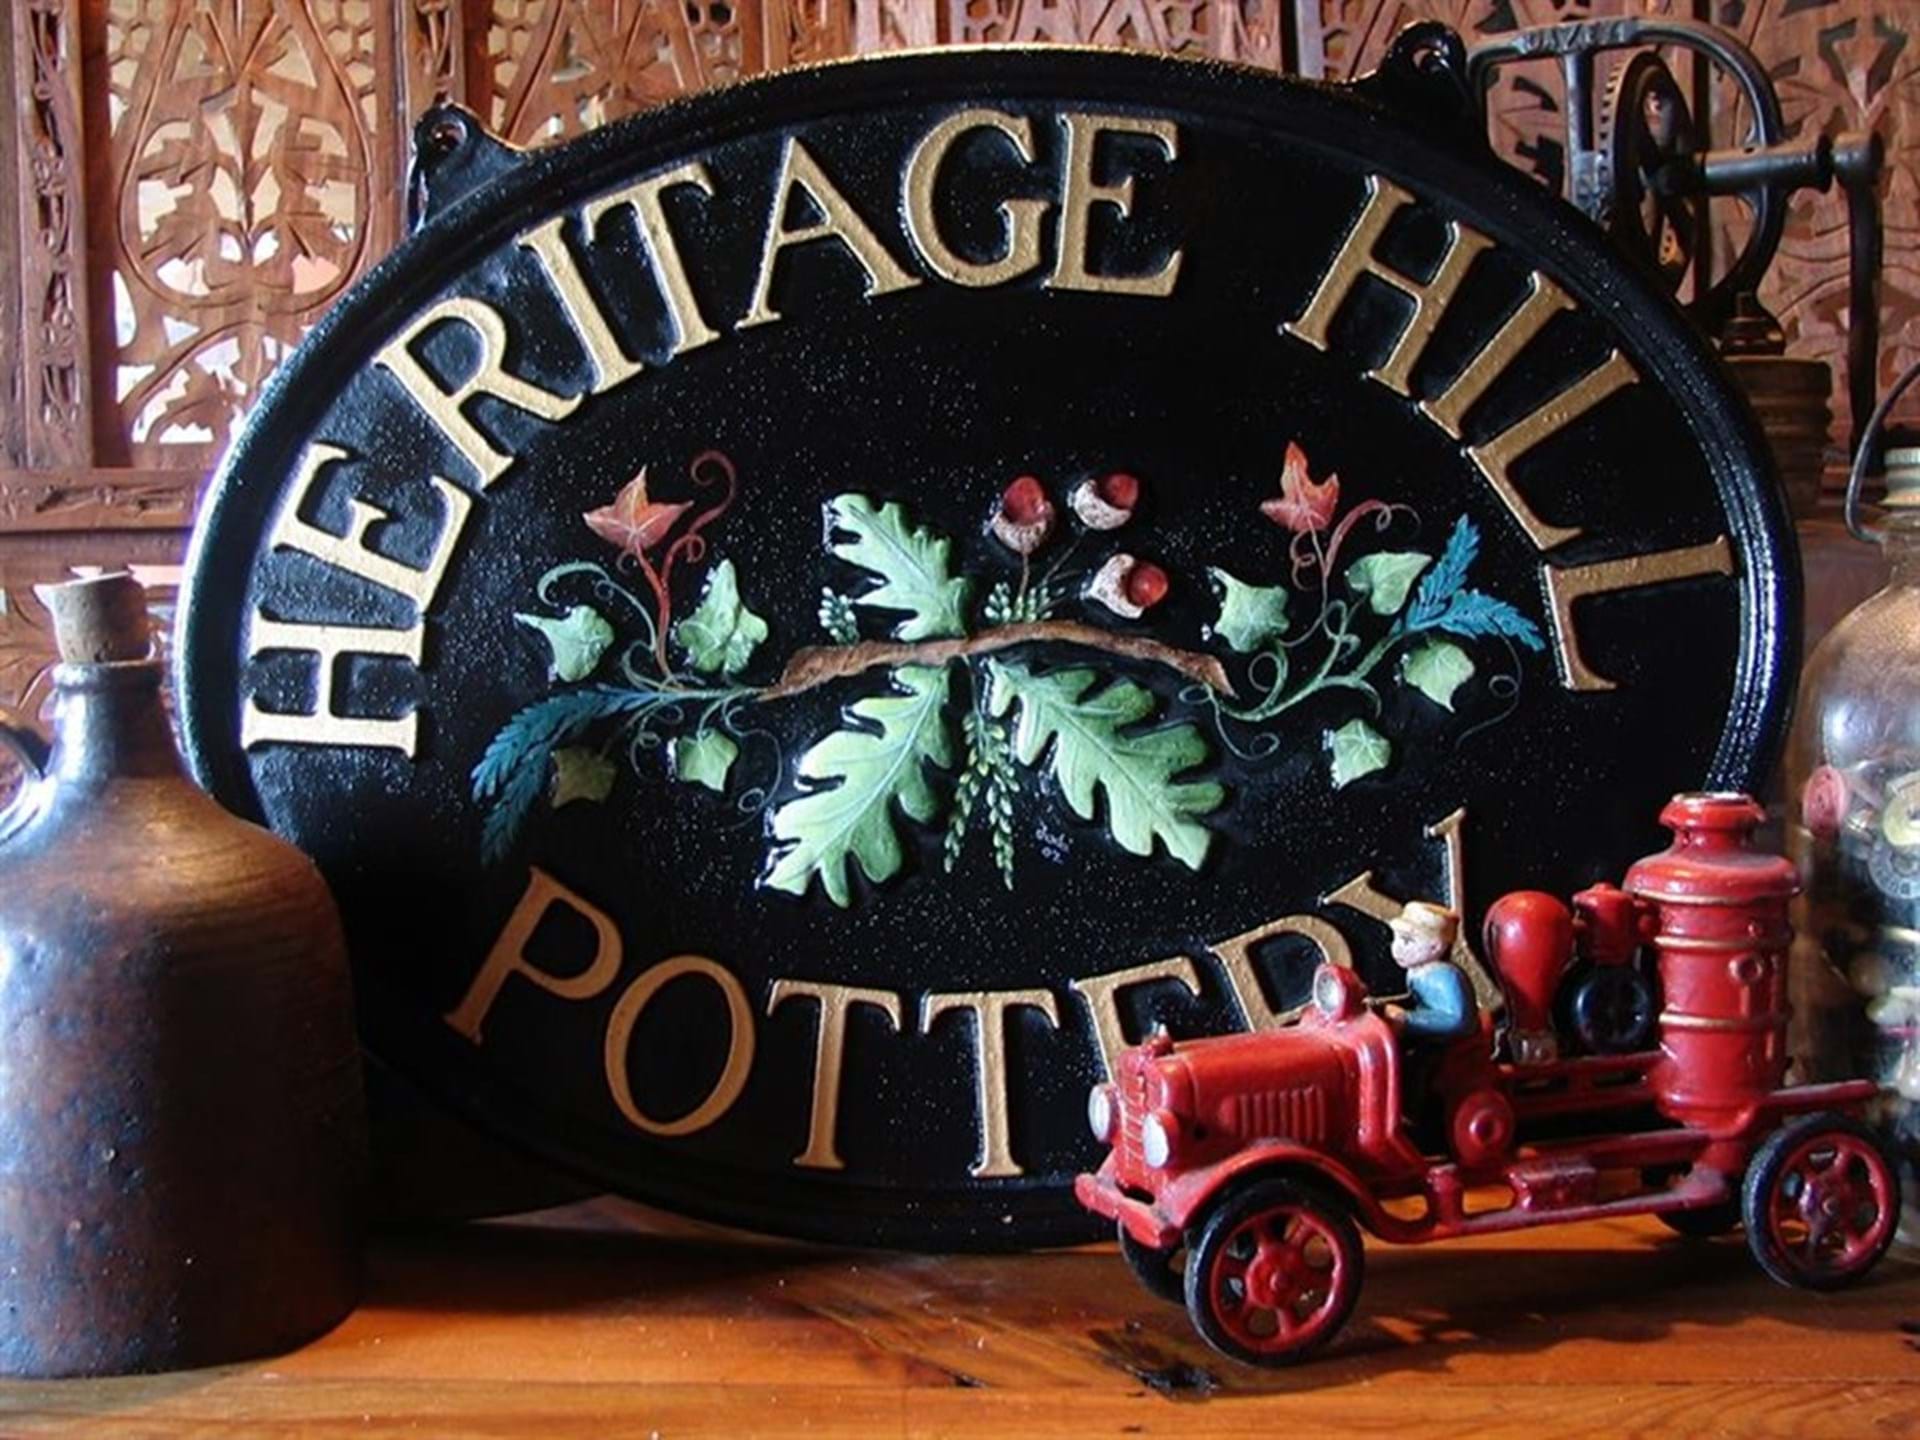 Heritage Hill Pottery in Red Oak, Iowa